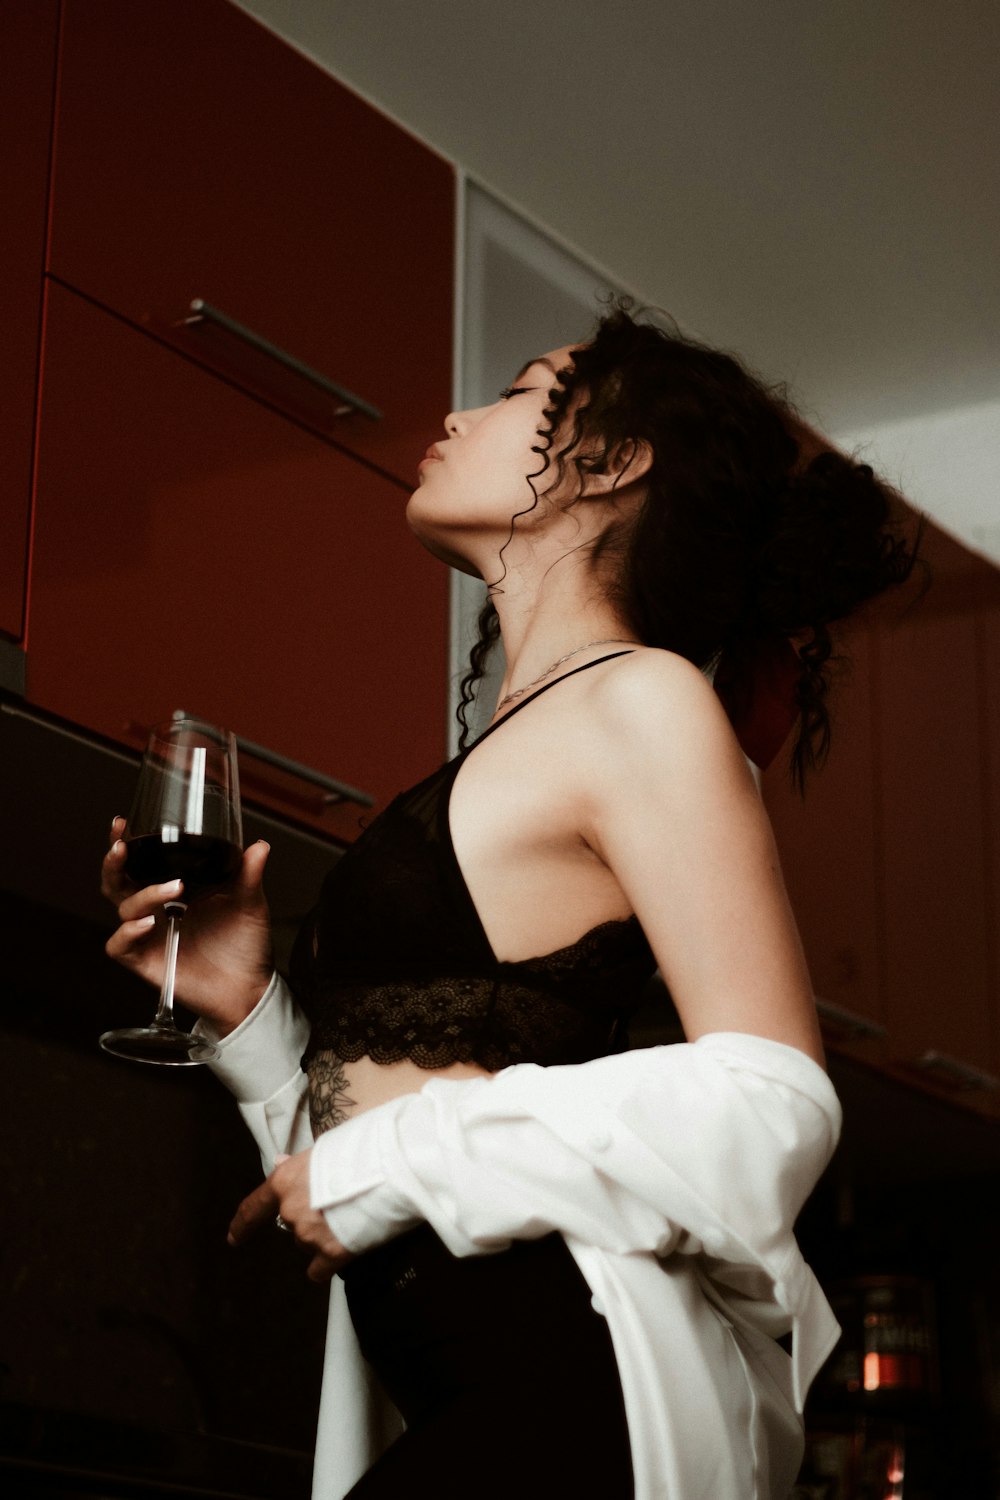 woman in black spaghetti strap top holding wine glass